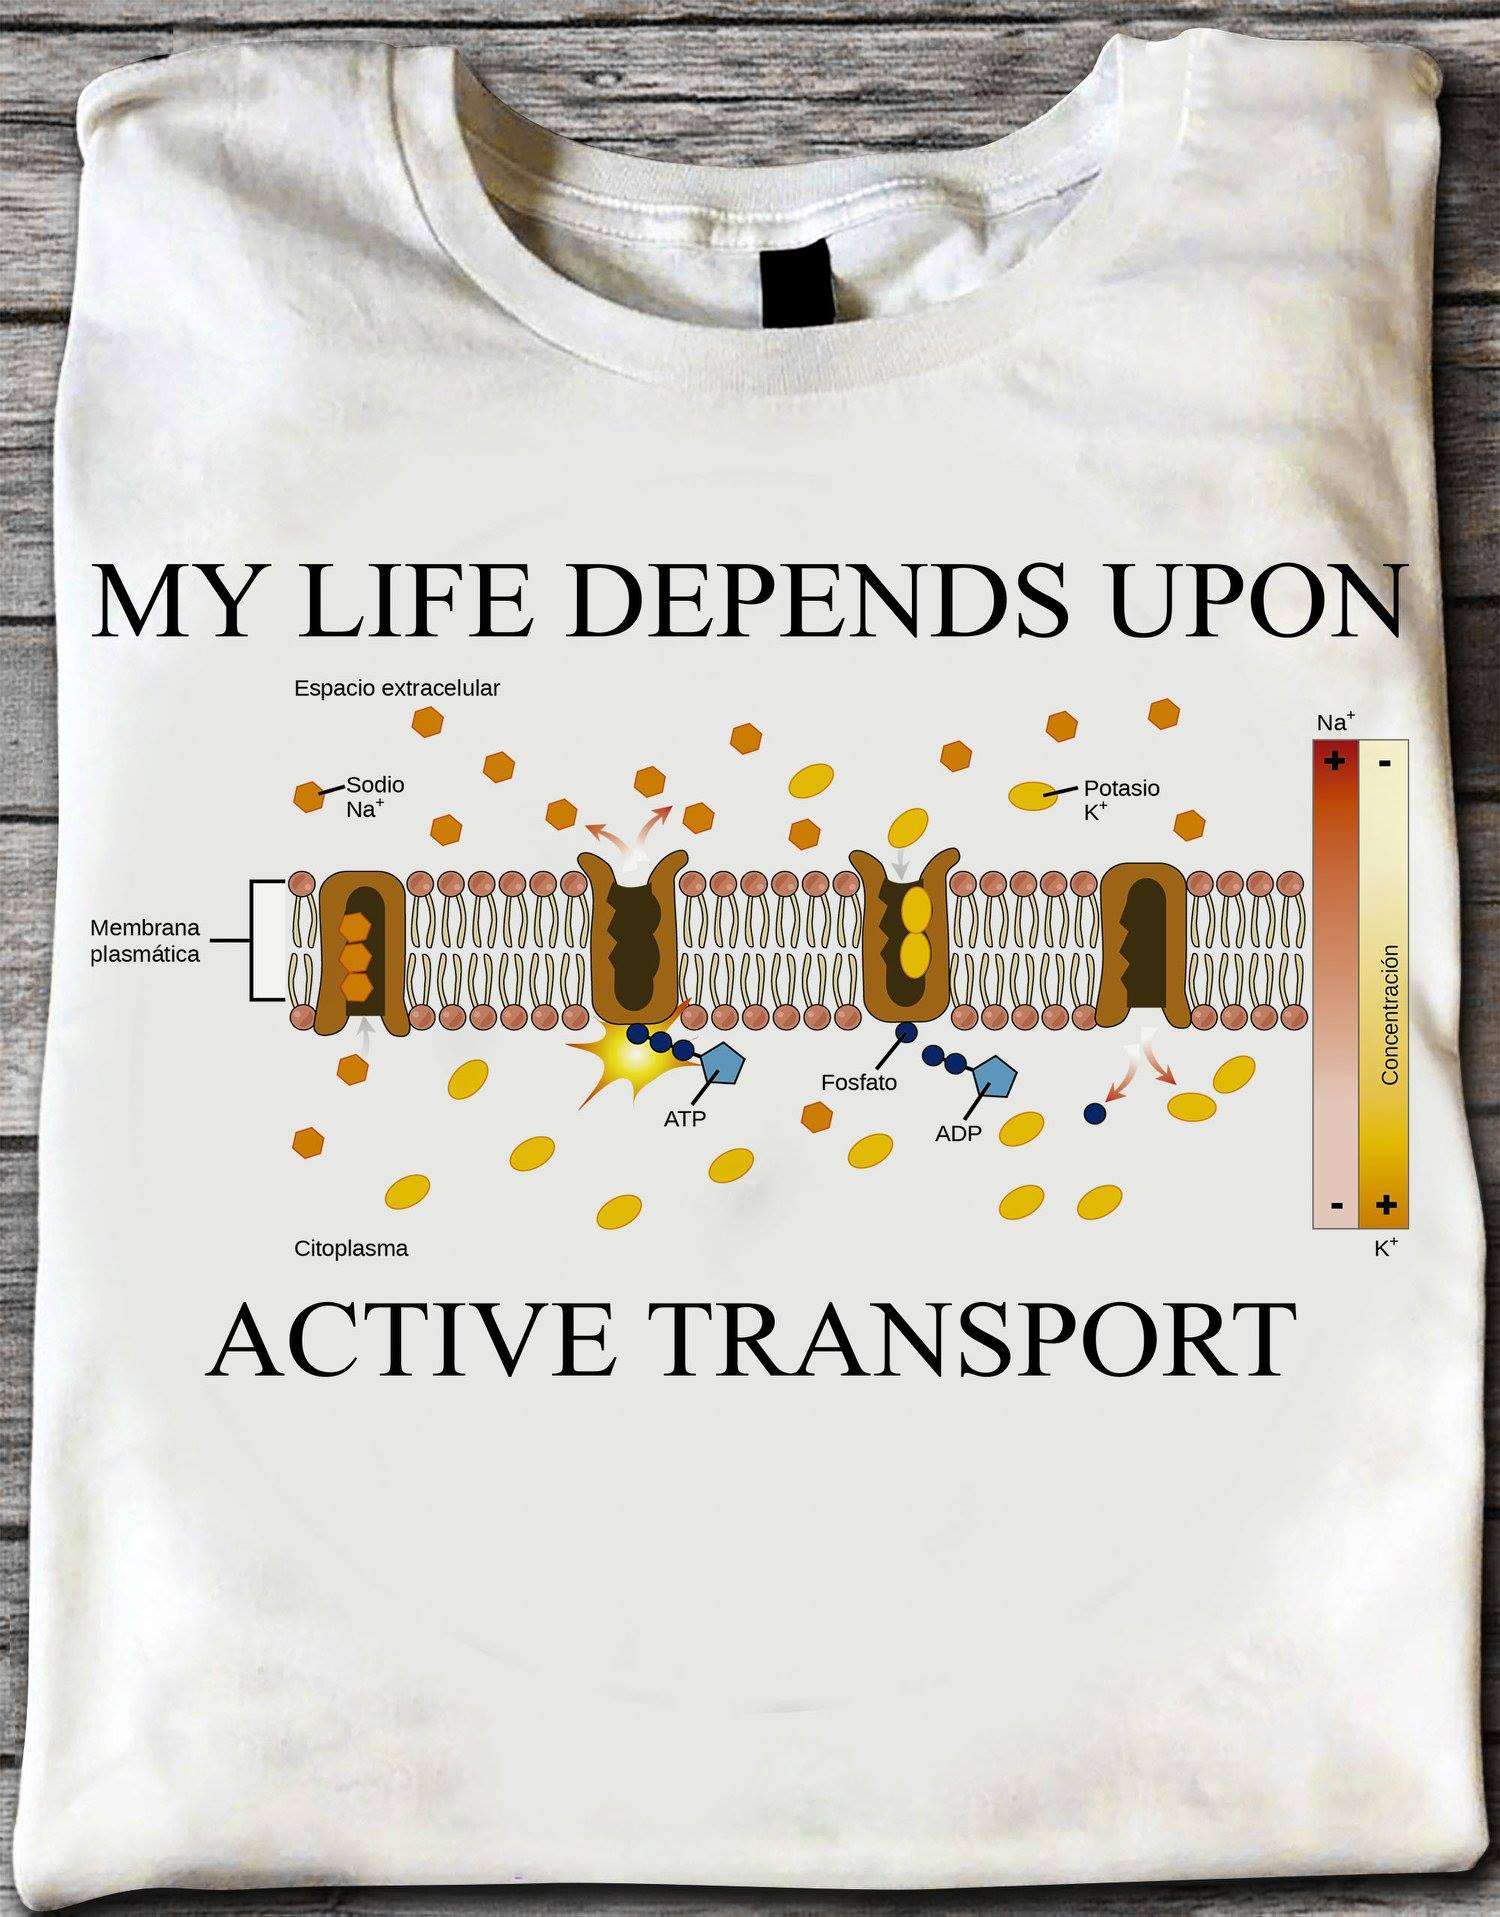 My life depends upon active transport - Espacio extracelular